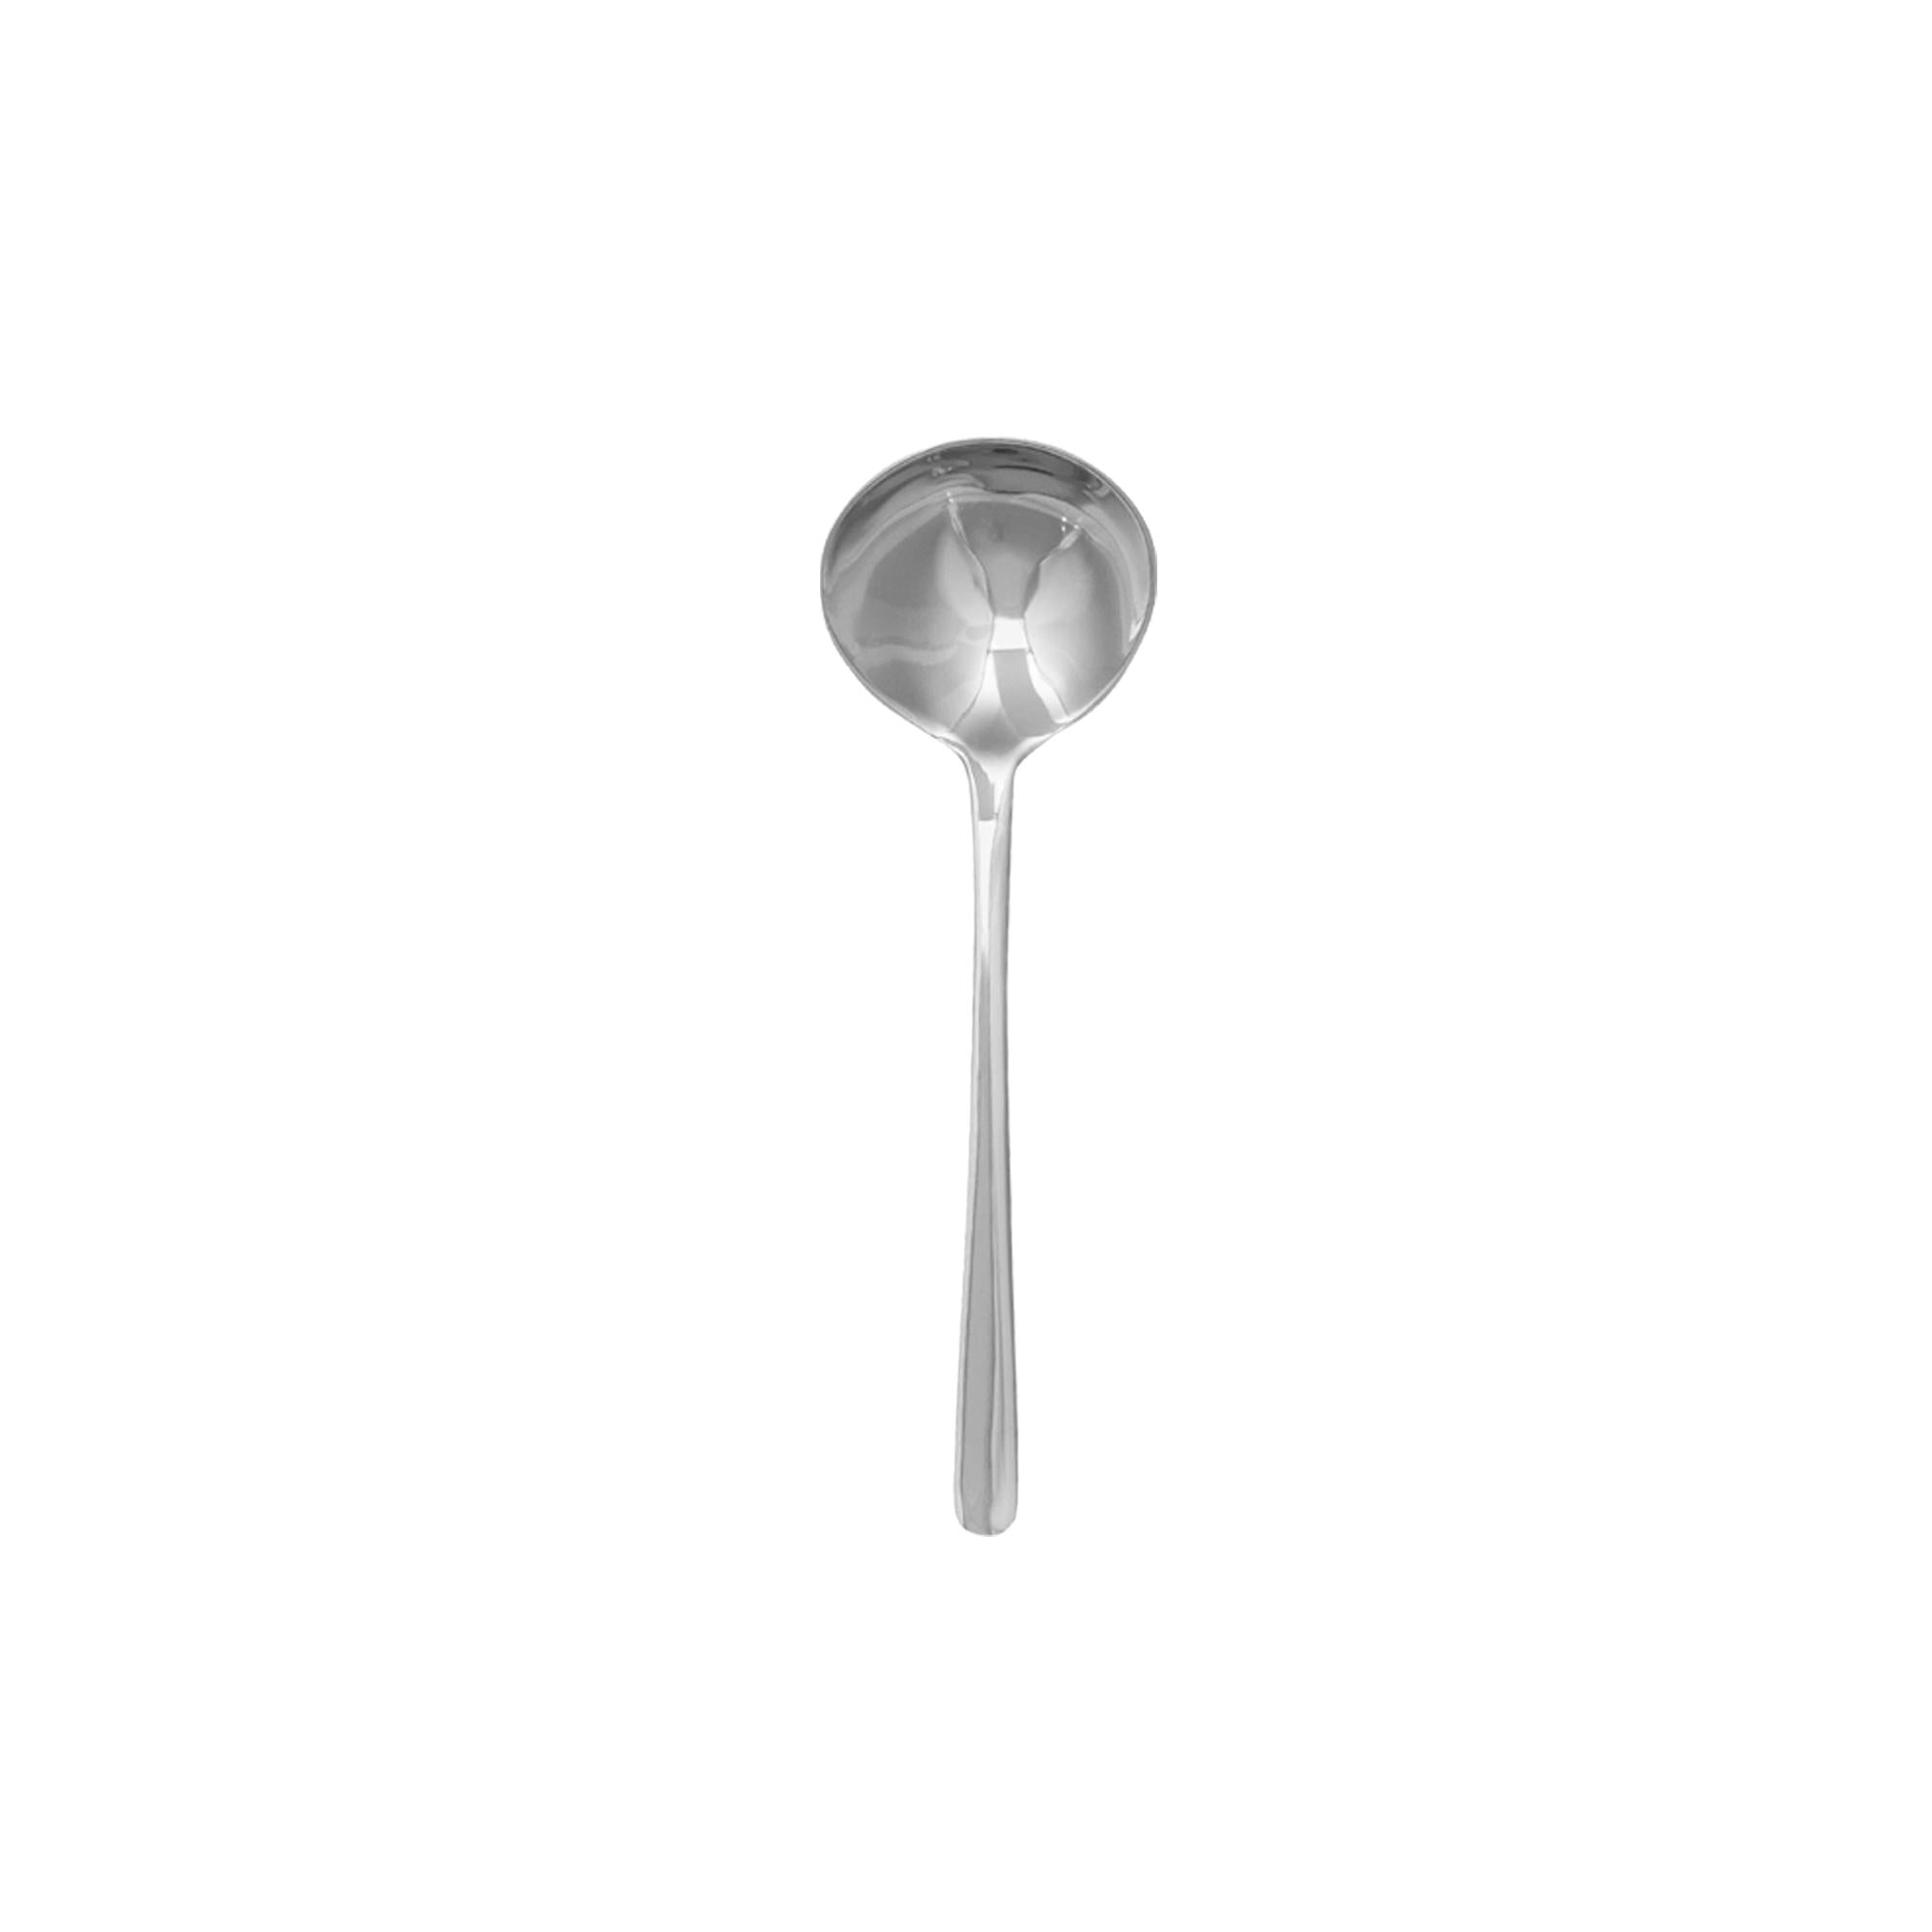 Kay Bojesen Grand Prix Soup/Broth Spoon, Polished Steel